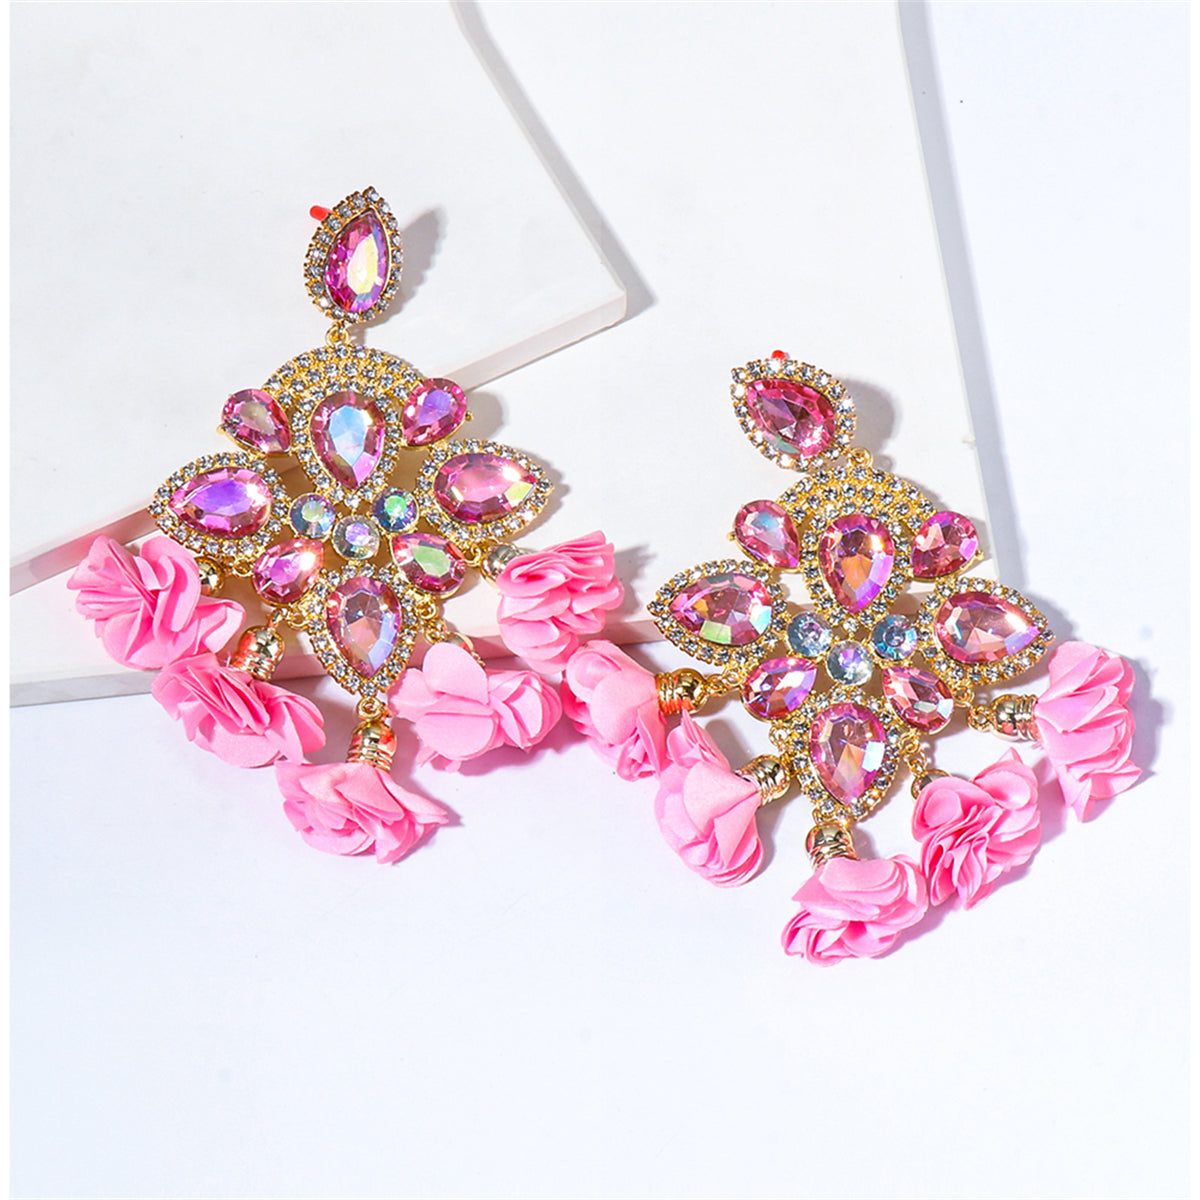 Pink Crystal & Cubic Zirconia Floral Pear-Cut Chandelier Drop Earrings